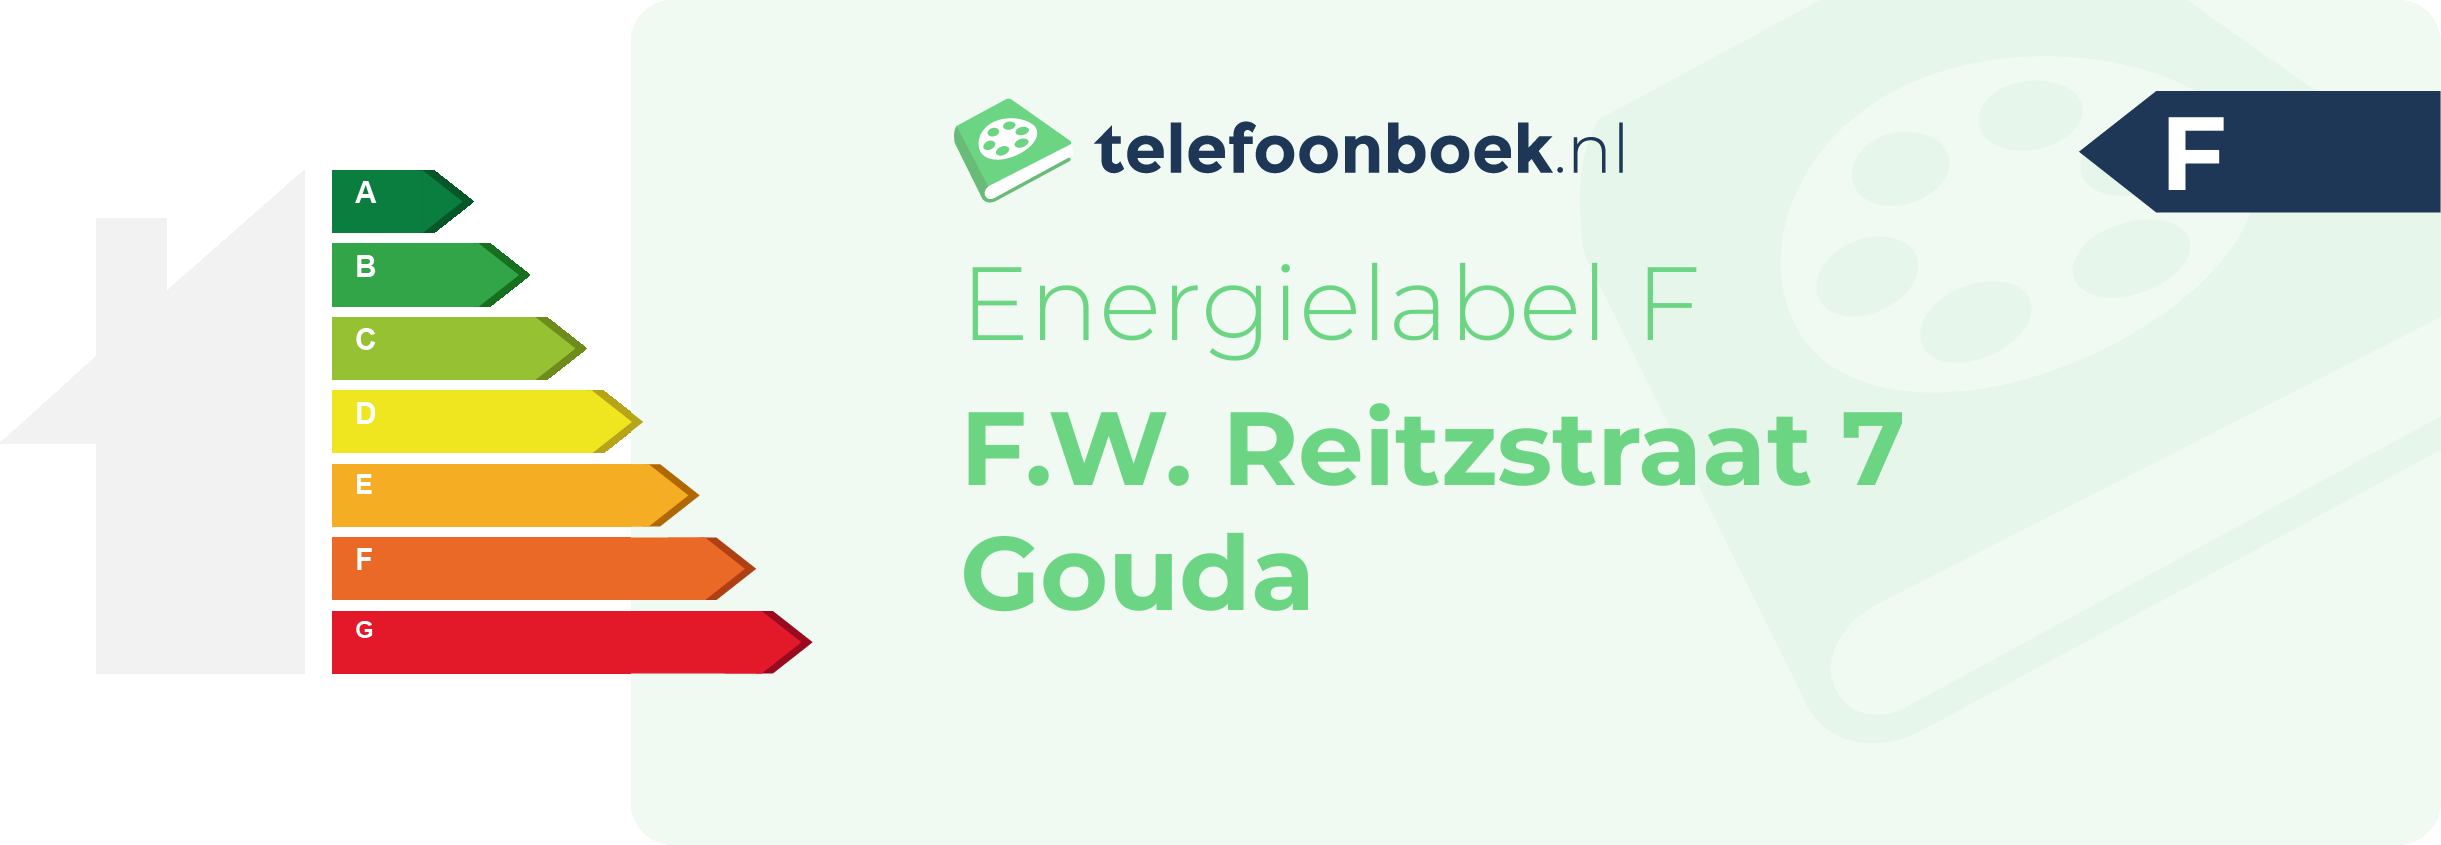 Energielabel F.W. Reitzstraat 7 Gouda